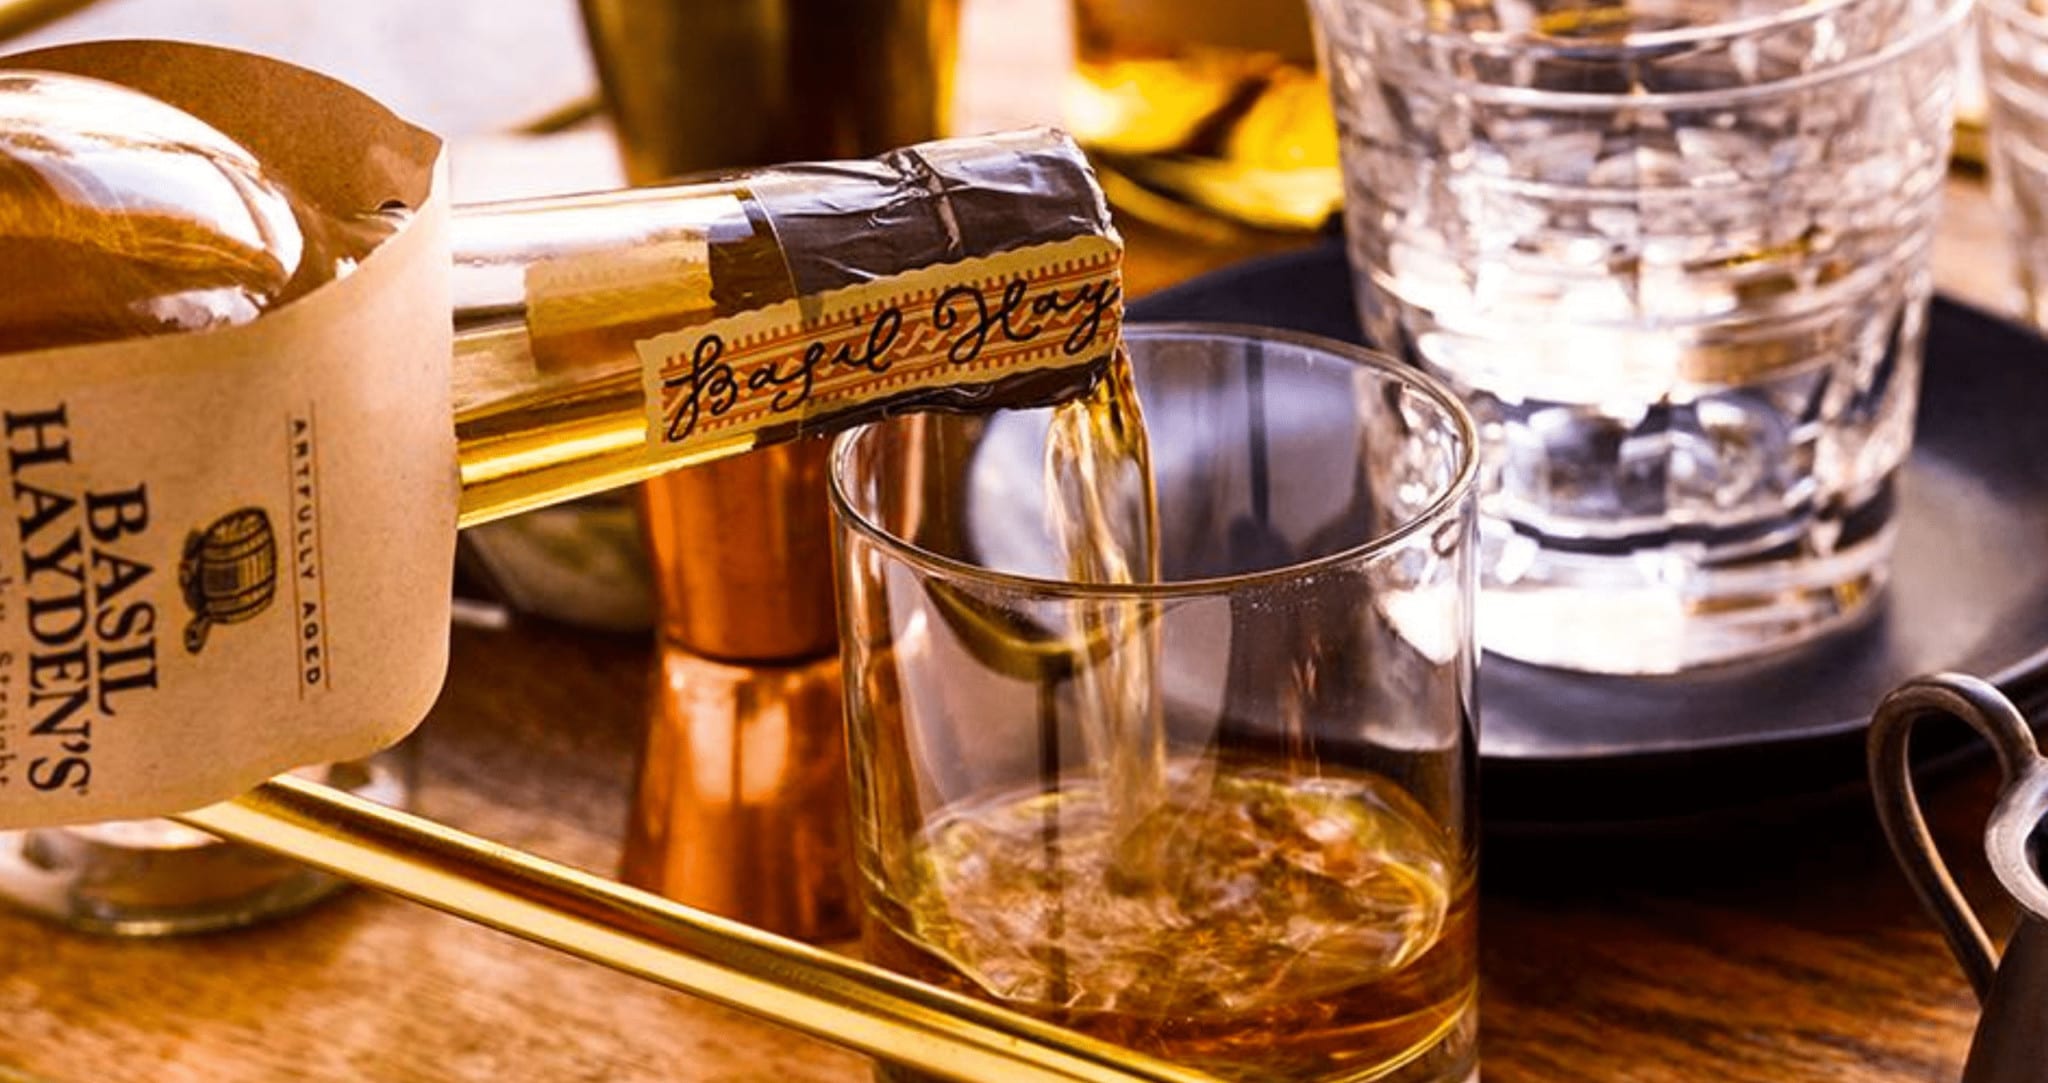 Basil Hayden’s Releases 10 Year Old Rye Whiskey - Uptown Spirits